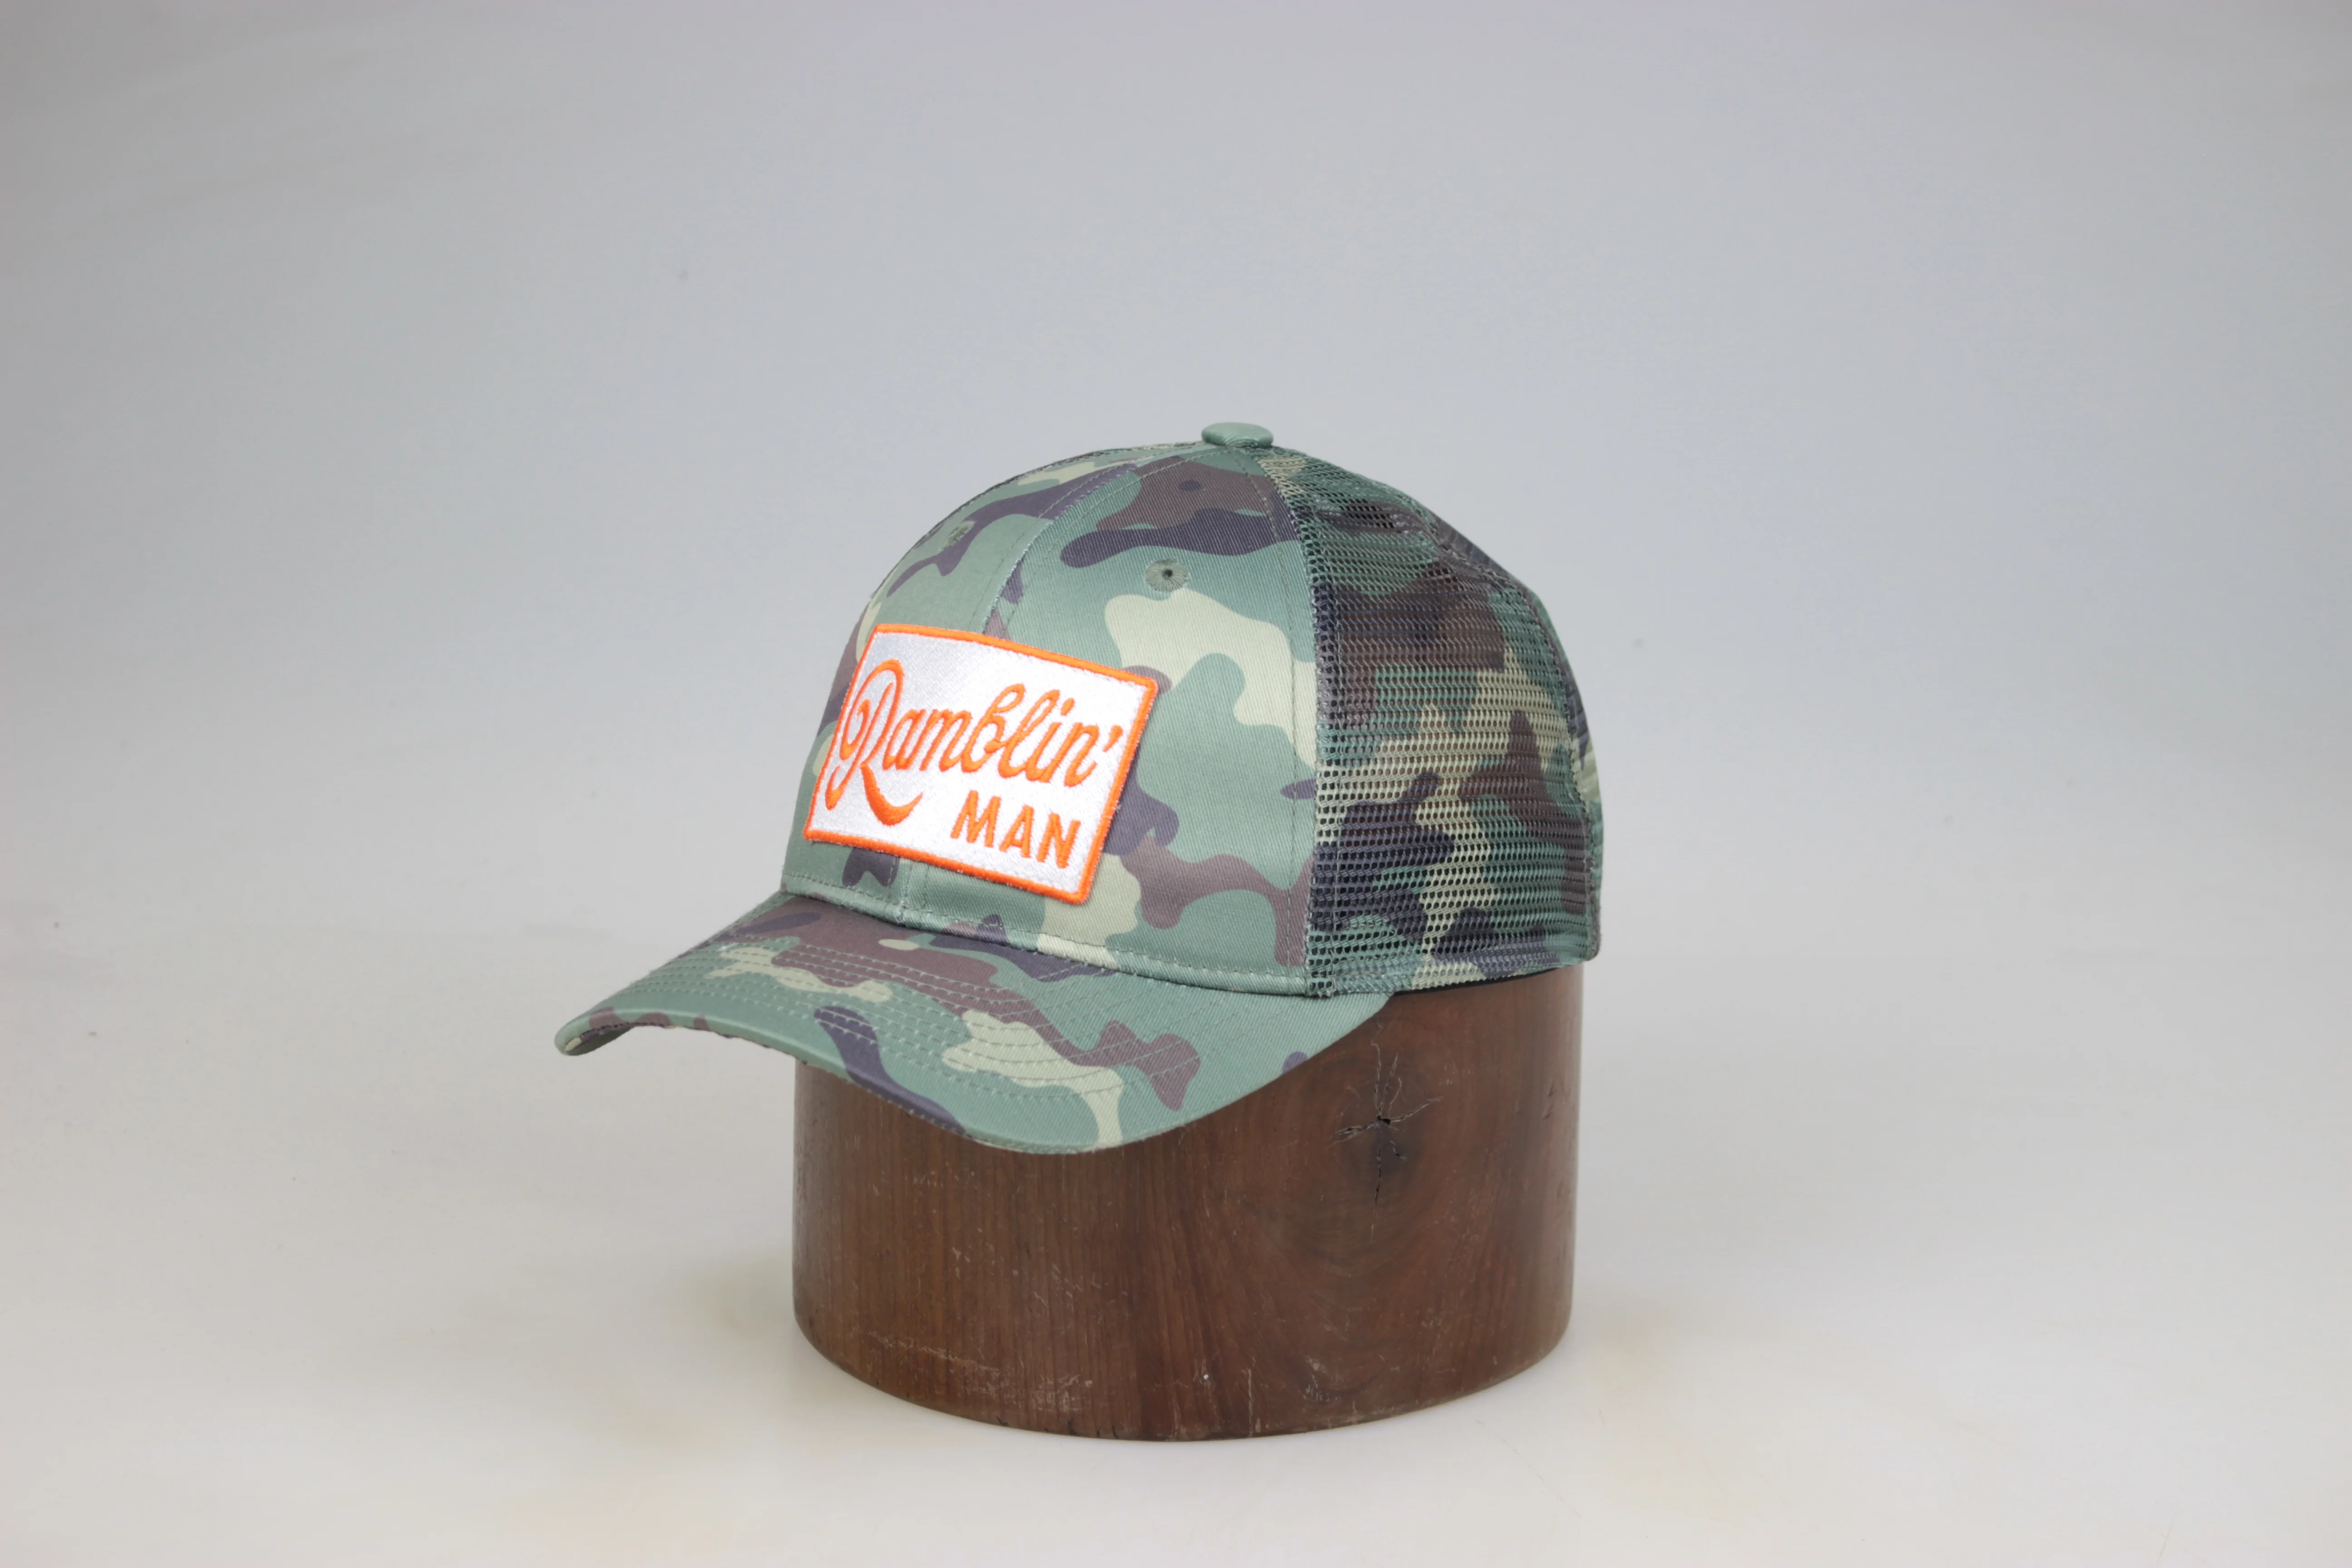 Unusual camouflage hat is very distinctive polyester mesh new era design baseball cap